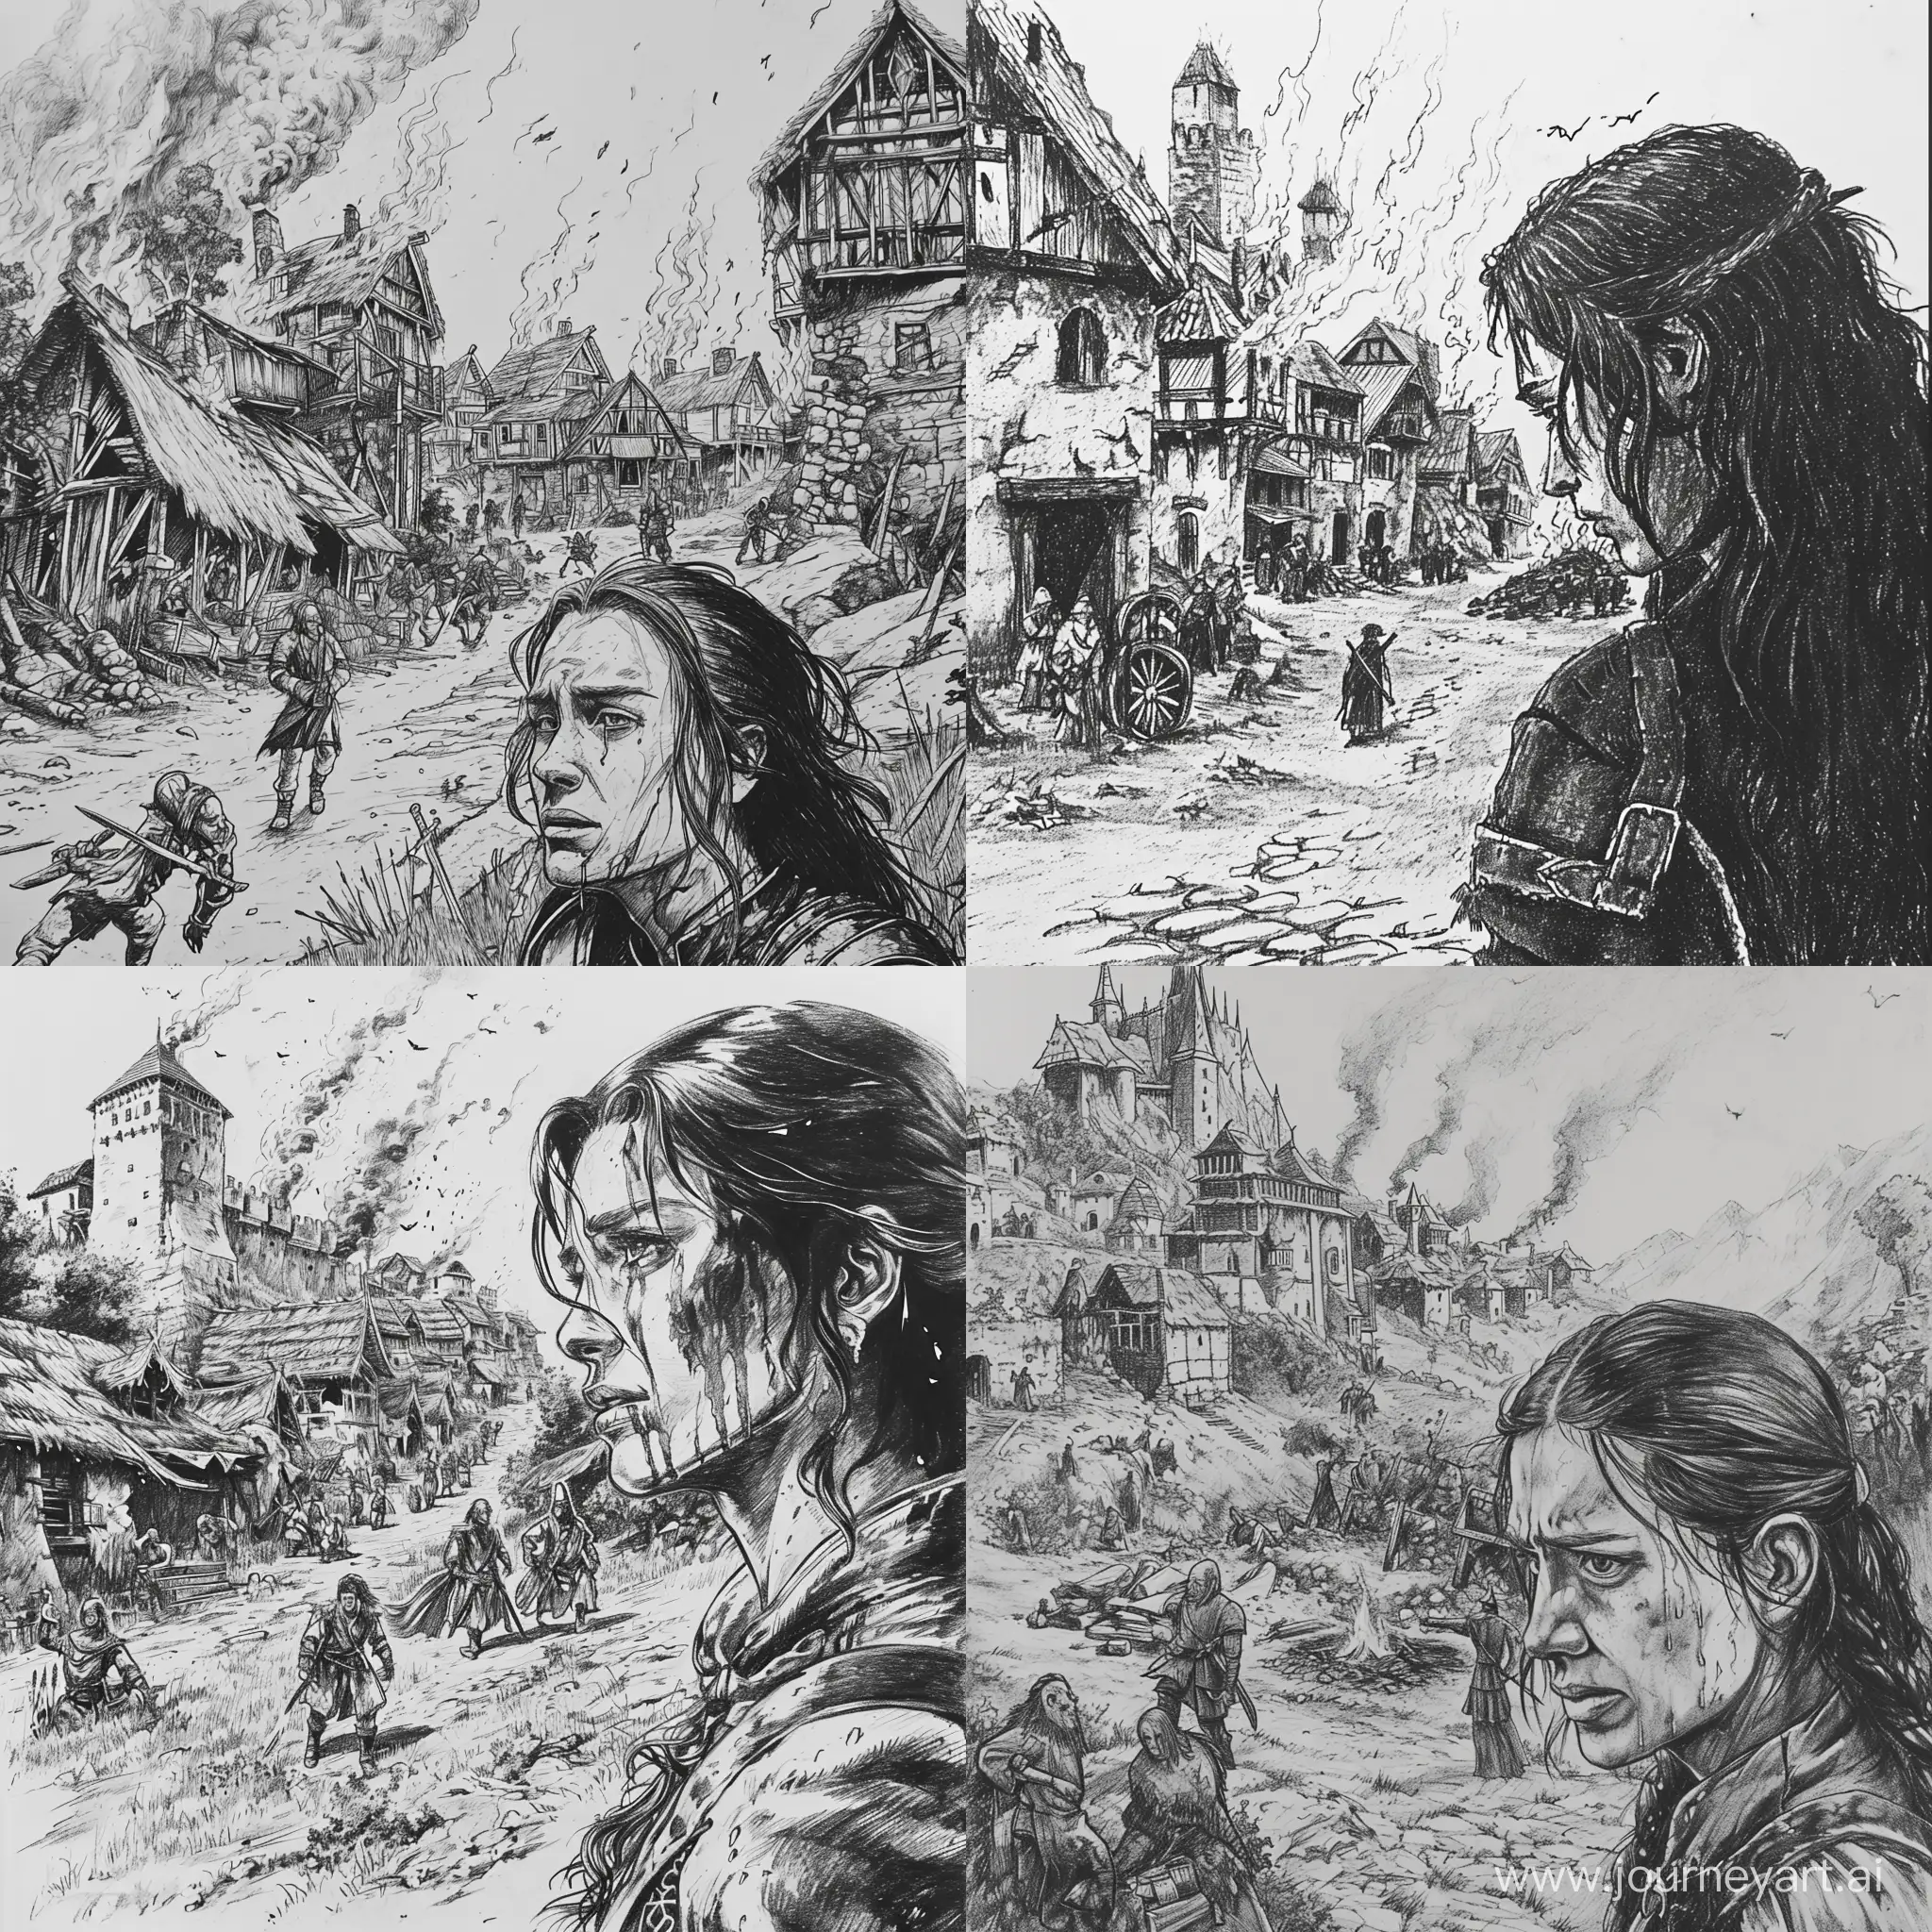 Dark-Fantasy-Scene-Burned-Village-Bandits-and-a-Crying-Woman